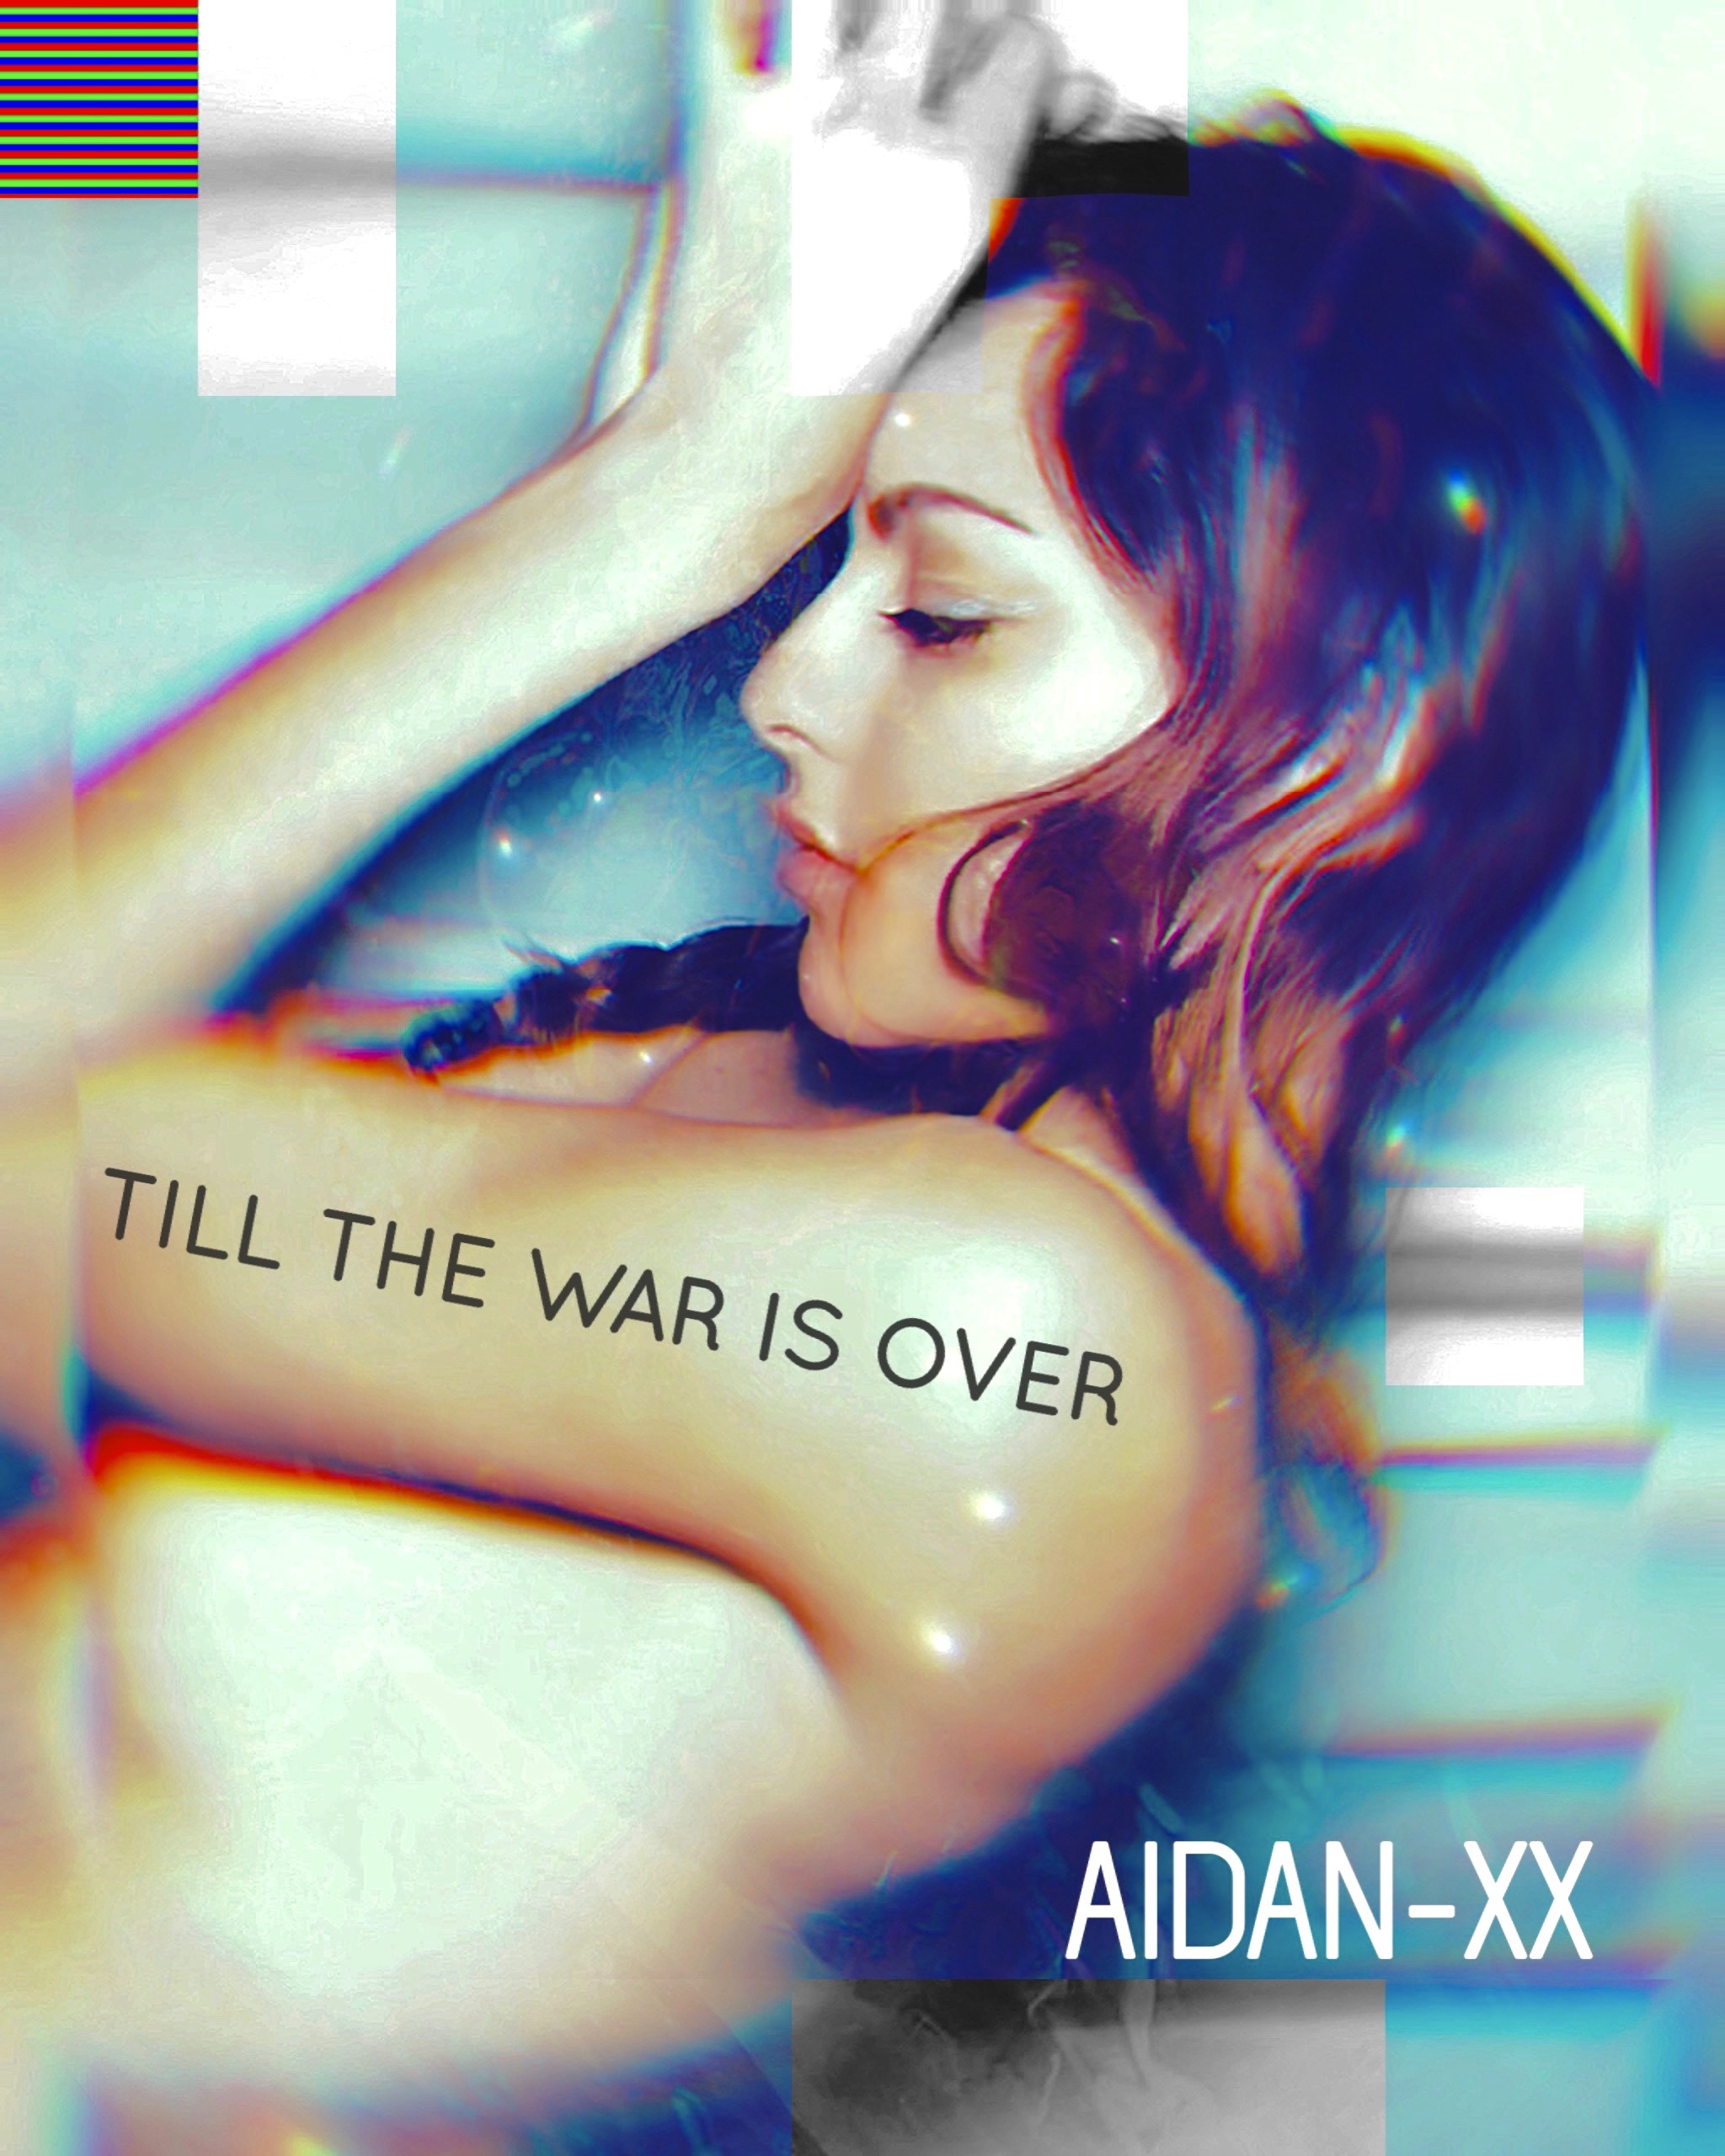  Aidan – XX releases debut single